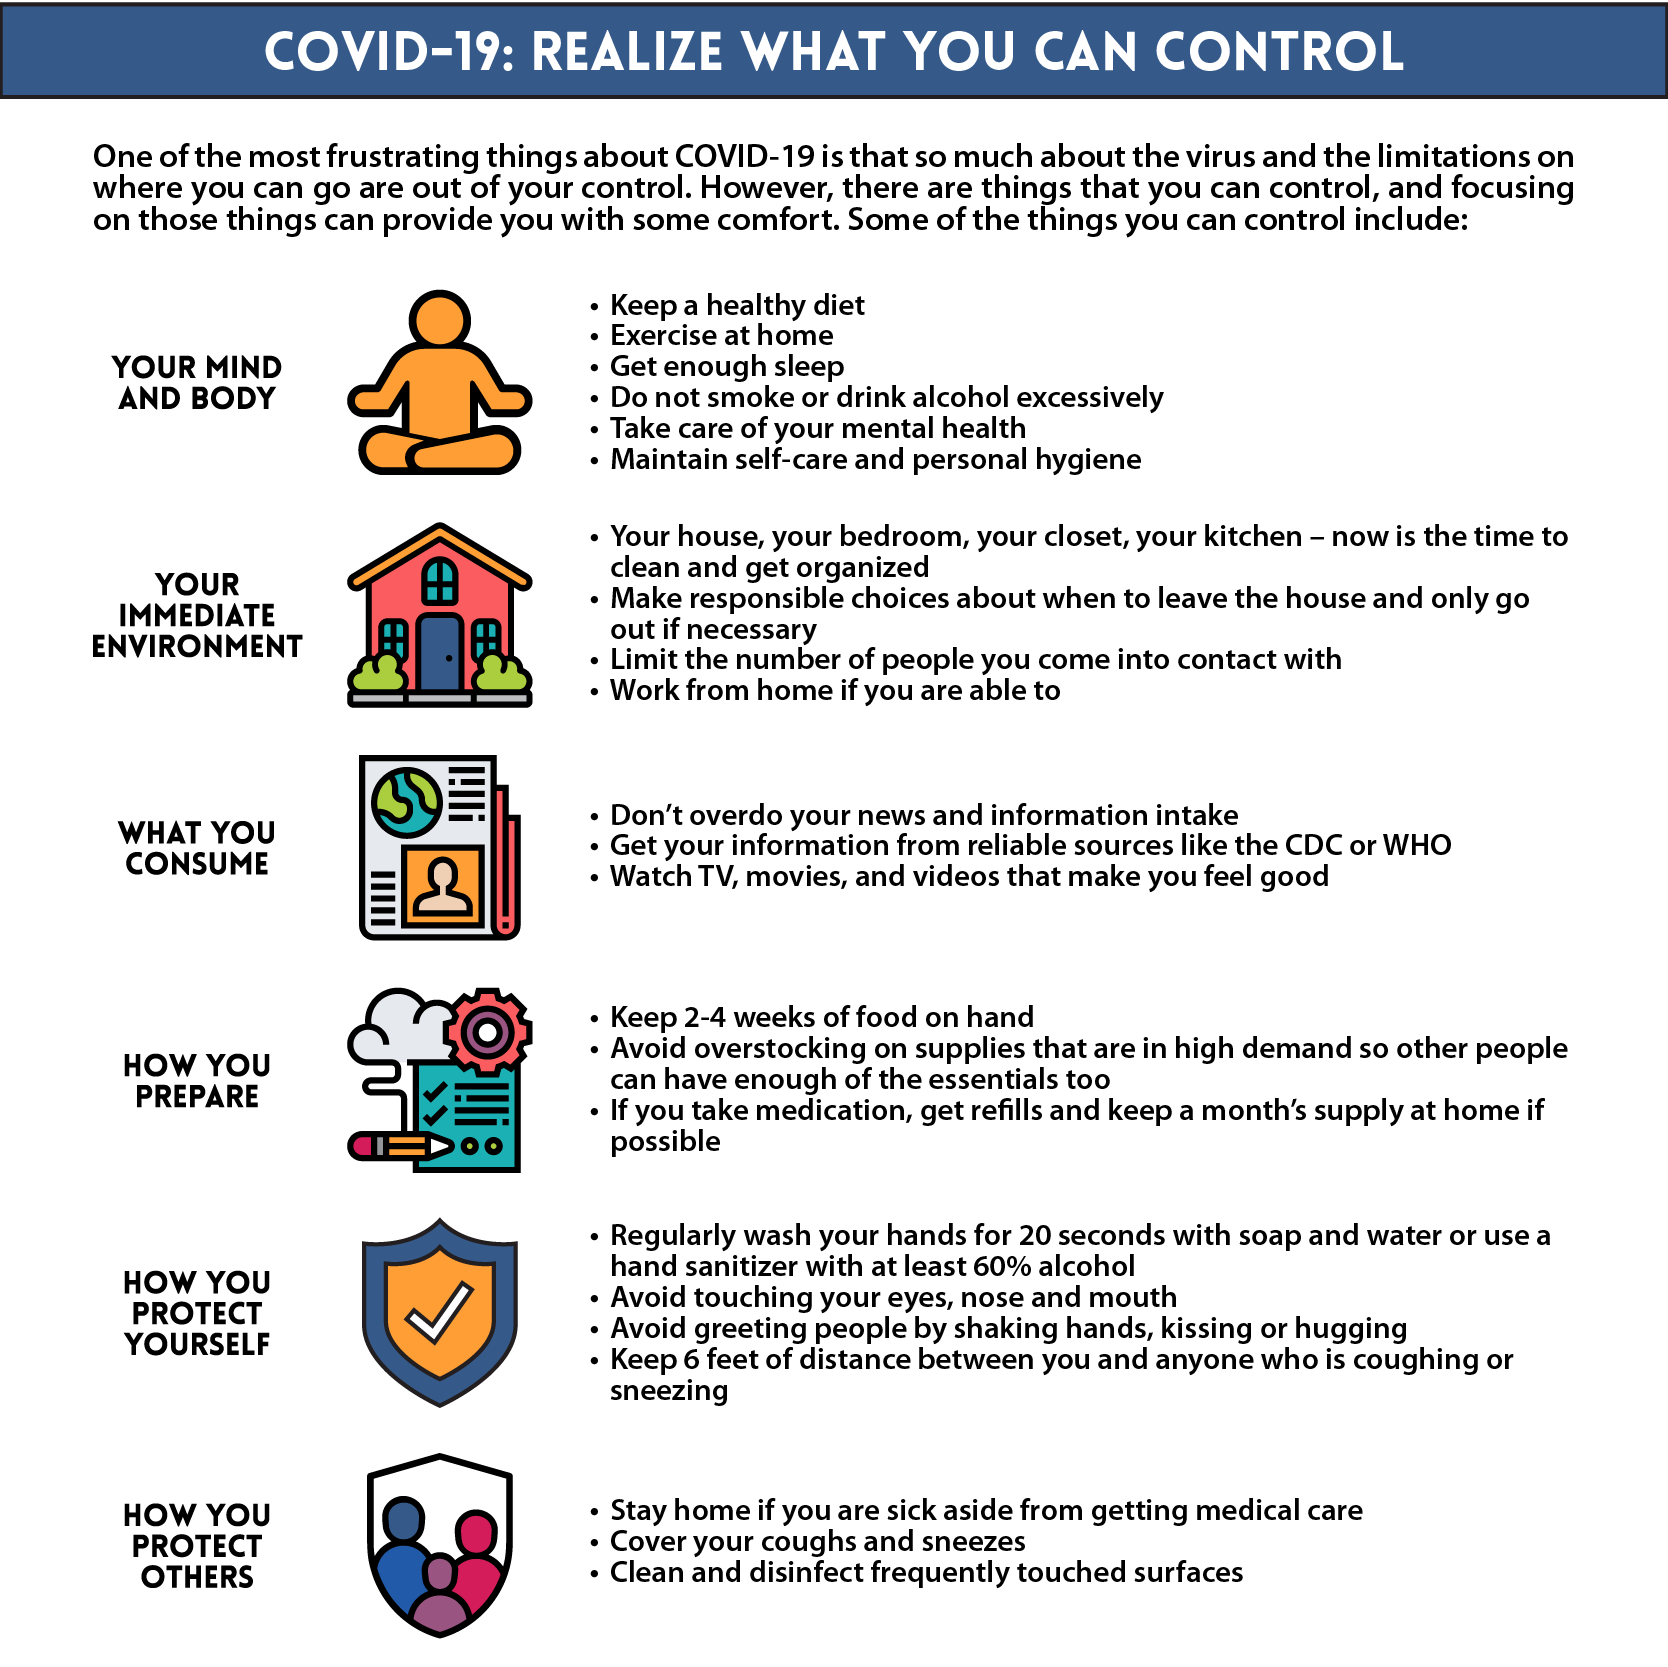 COVID-19 Infographic - Control